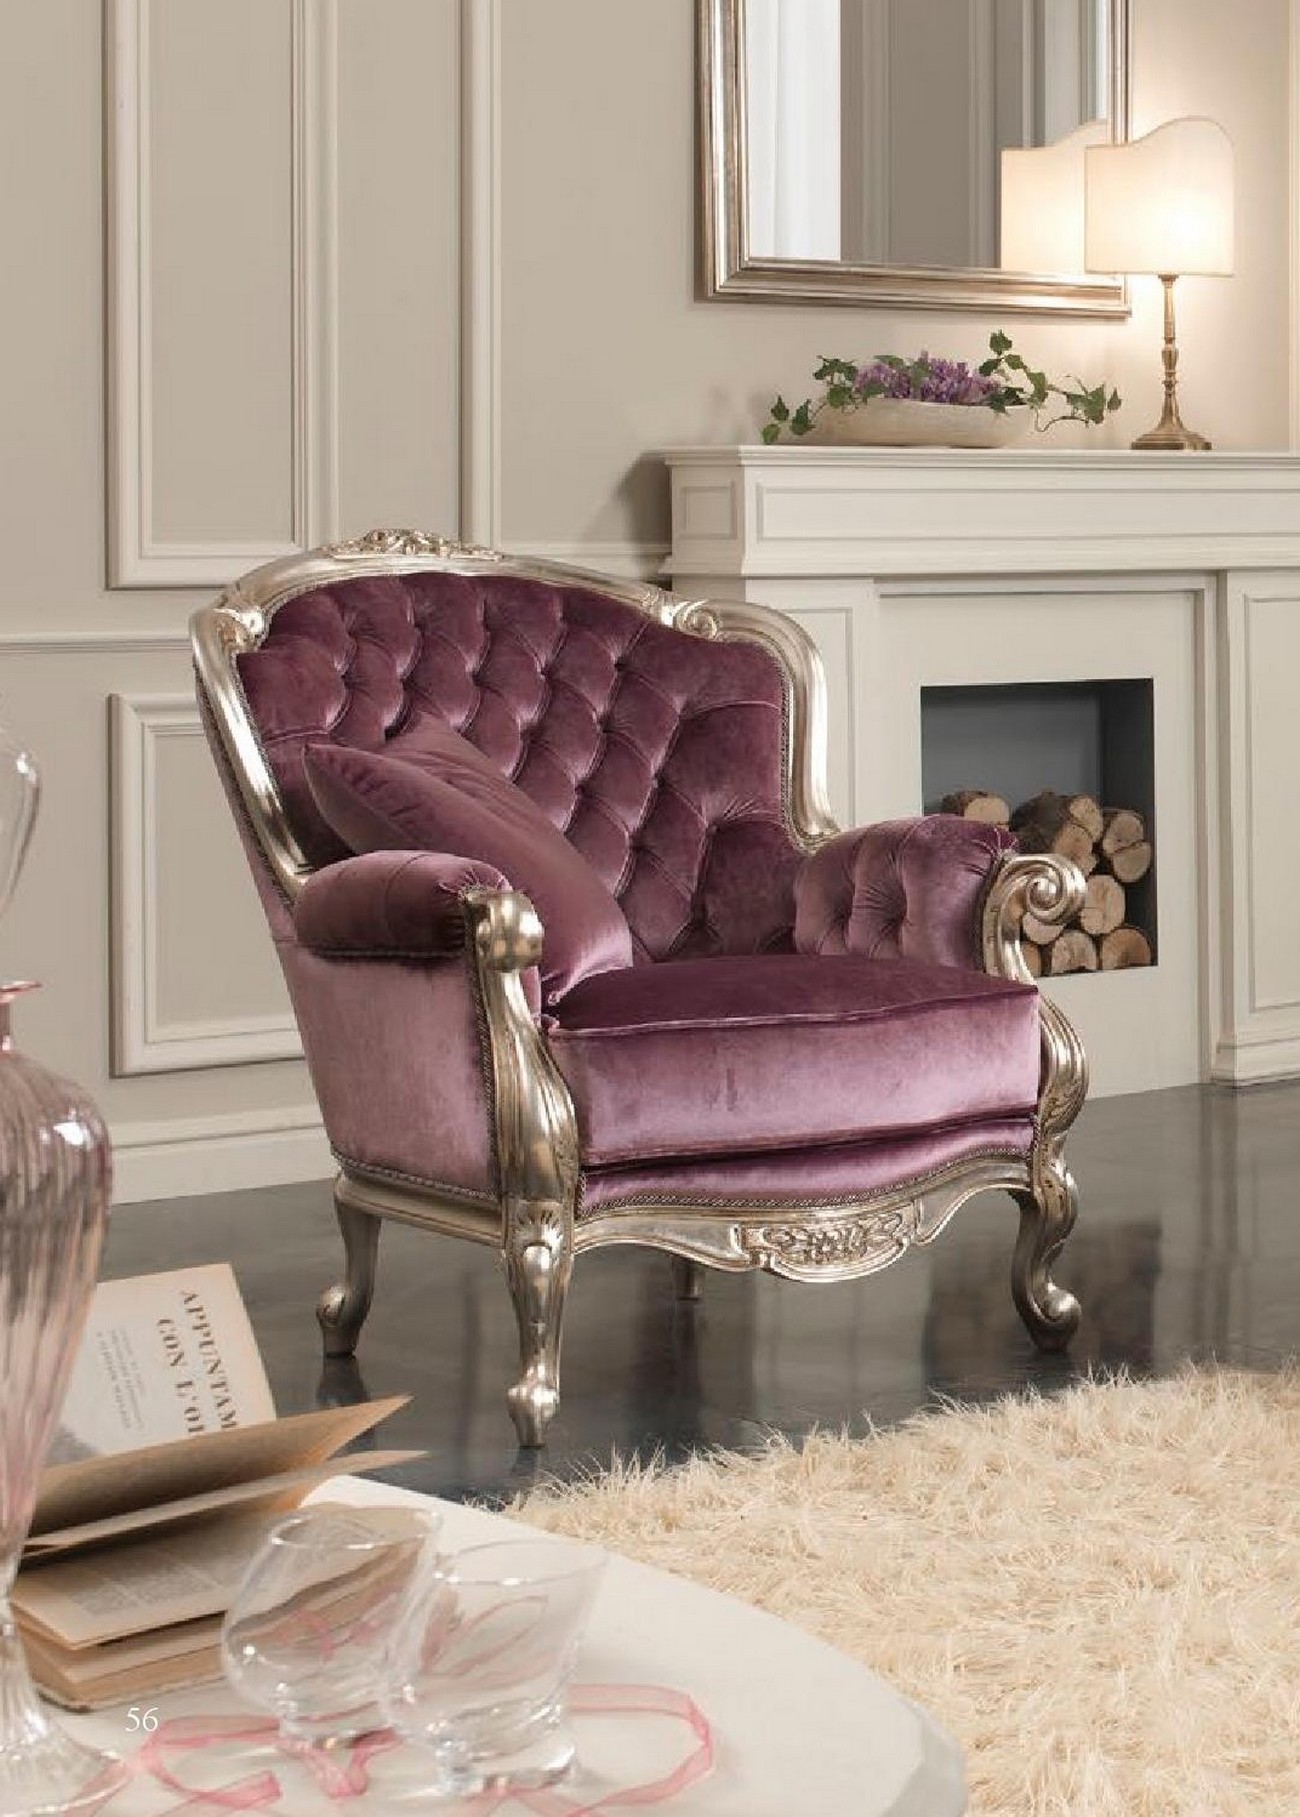 Luis XV armchair